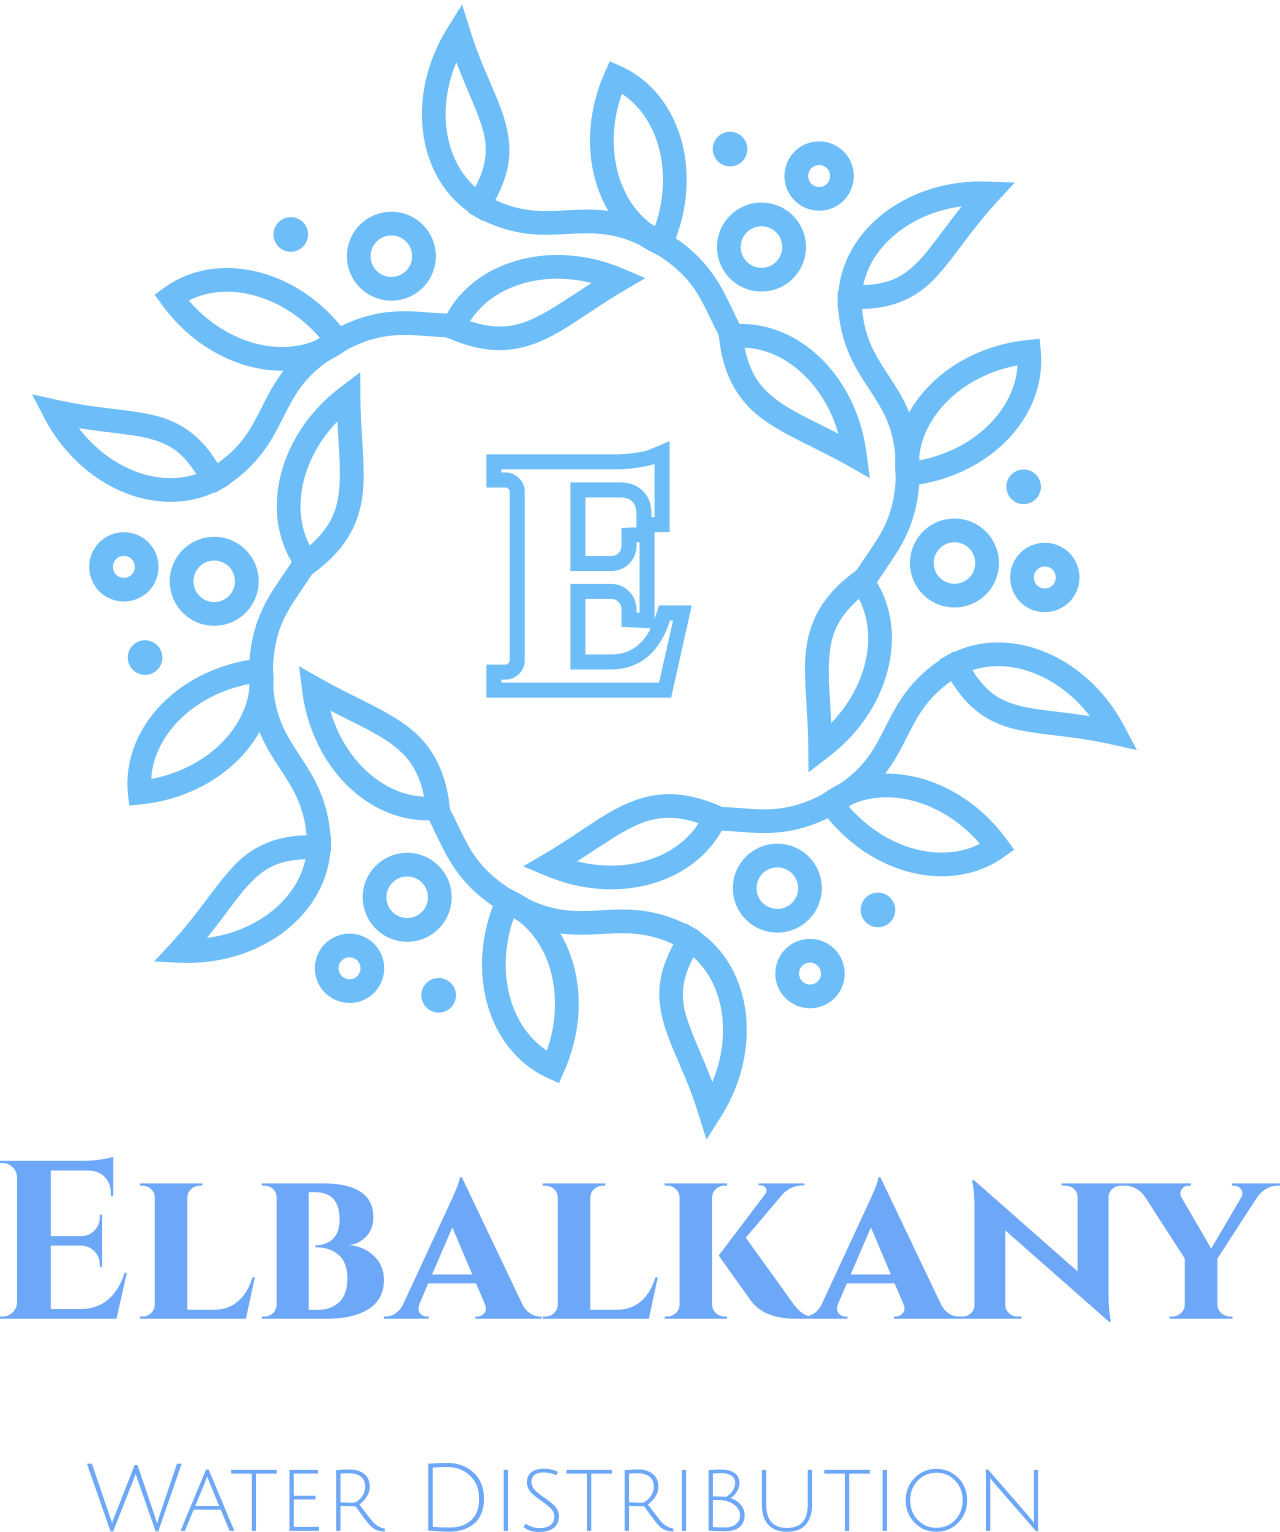 Elbalkany 's web page